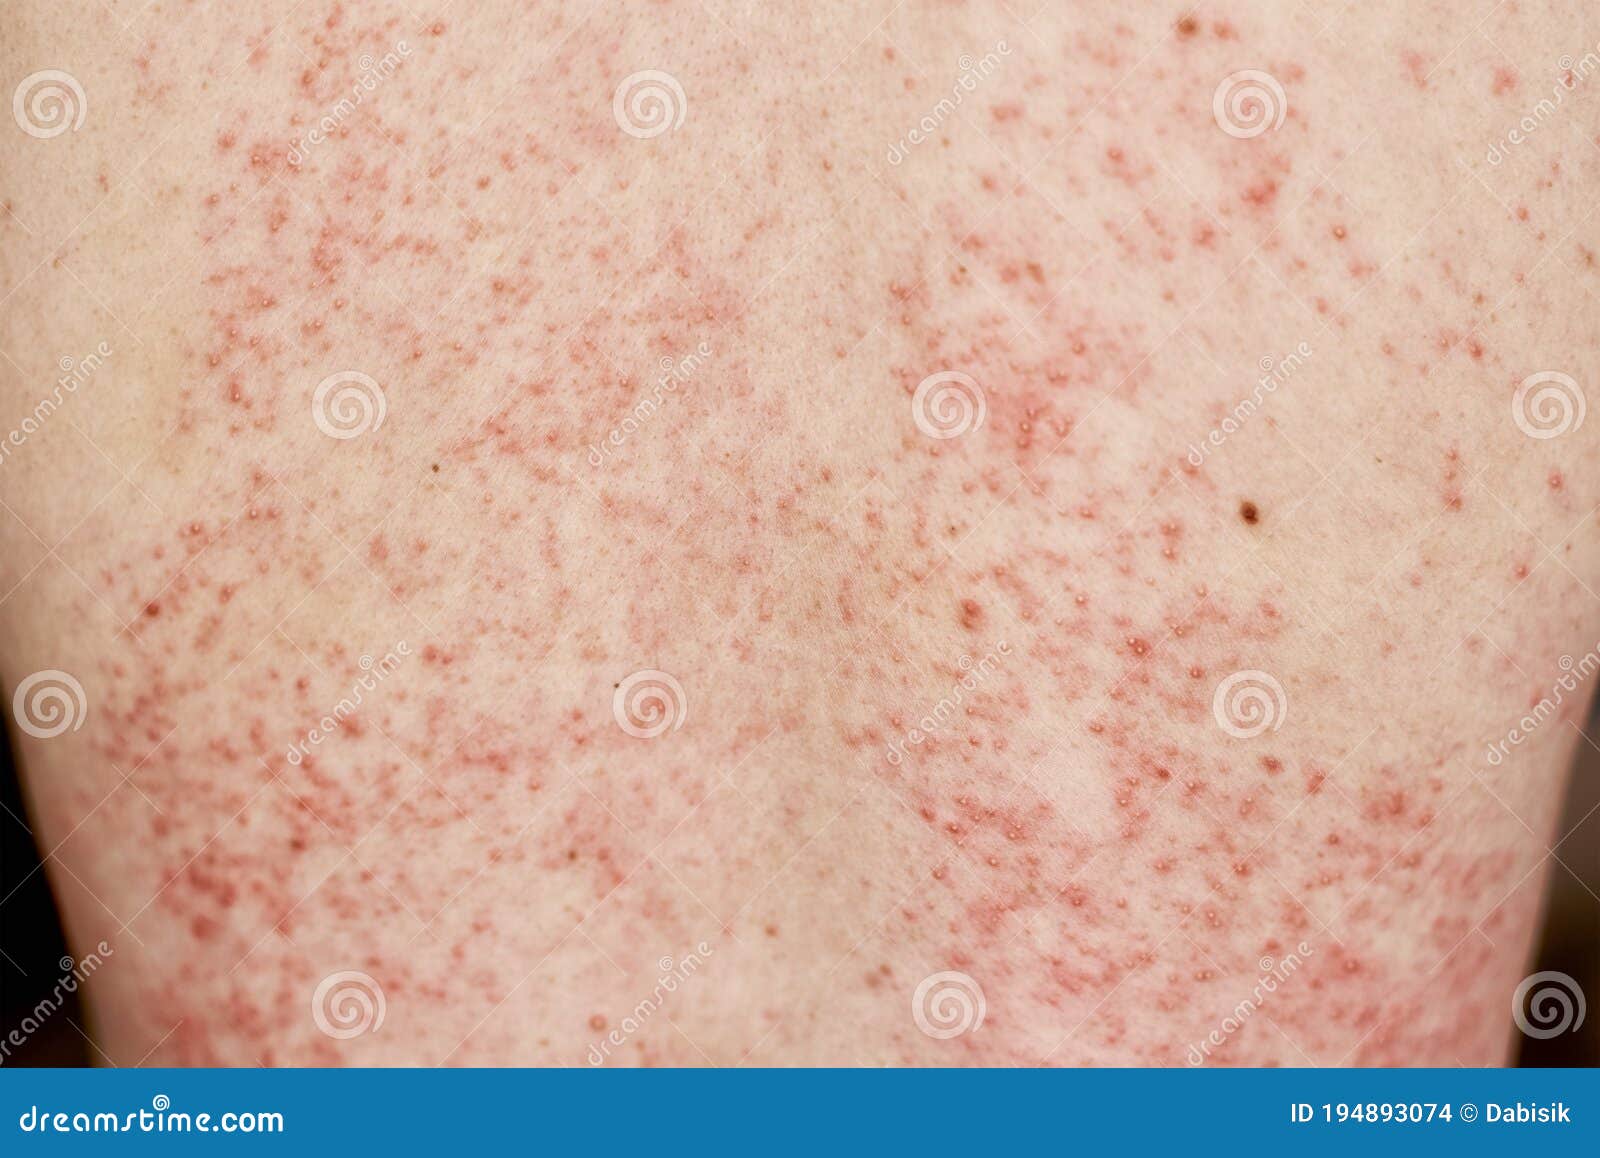 Allergic Rash On Skin Woman With Dermatology Problem On Back Skin